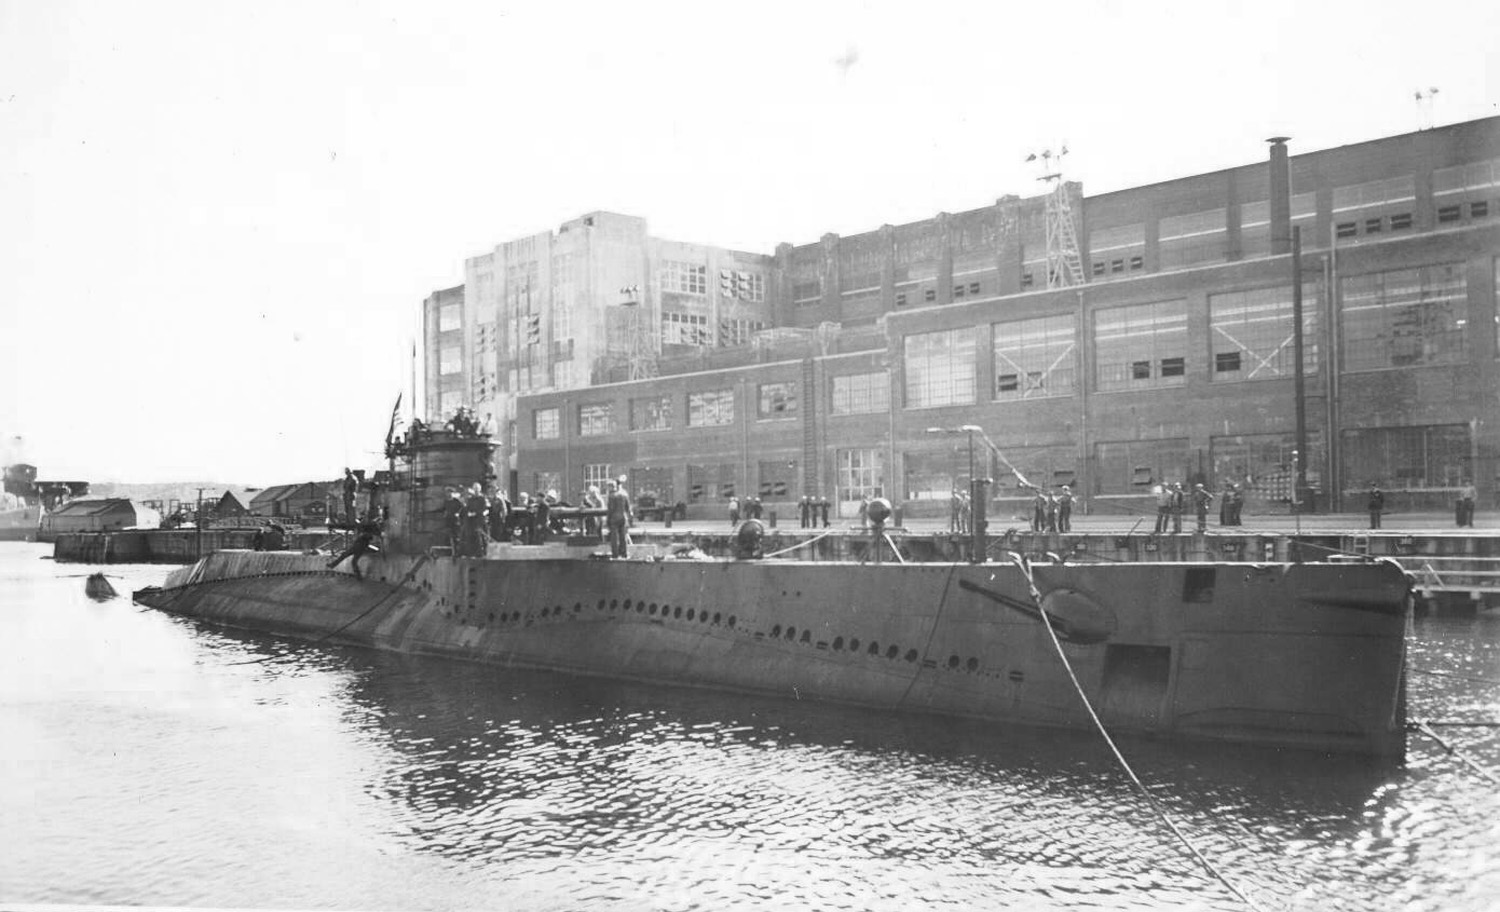 USS S-35 at Puget Sound Naval Shipyard, Bremerton, Washington, United States, 2 May 1943, photo 1 of 2